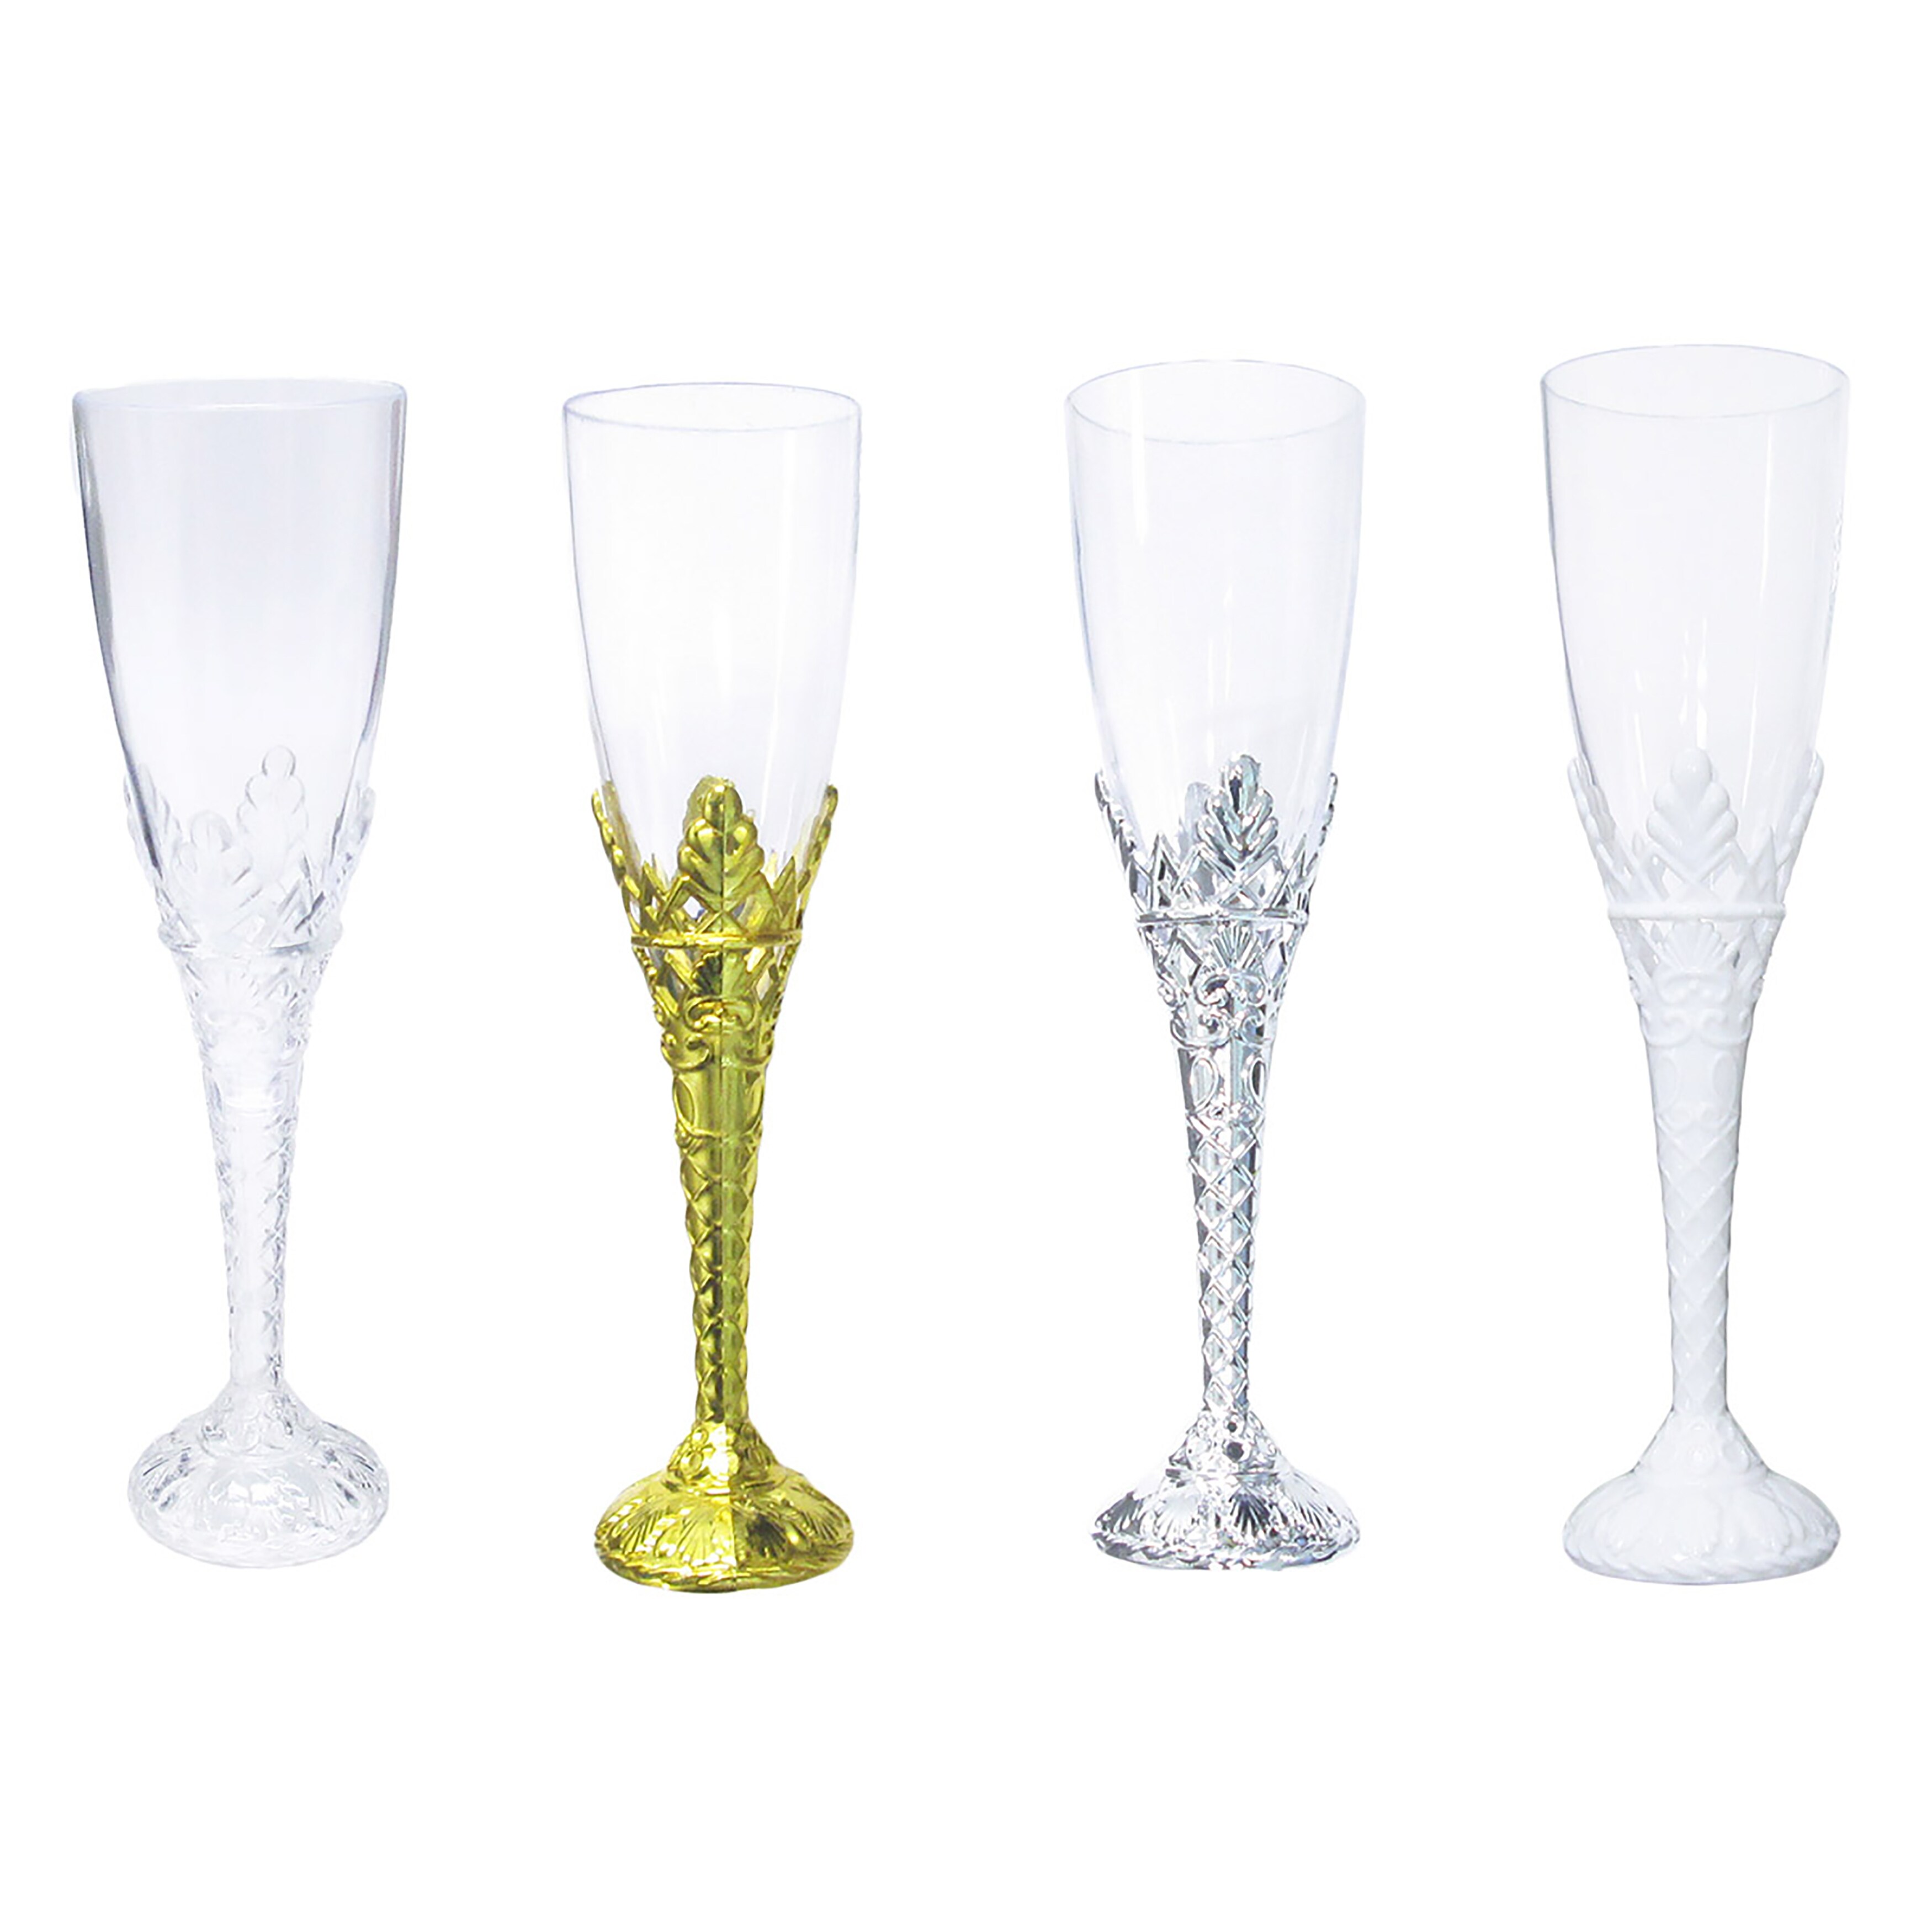 JumblWare 24 9-oz. Stemless Disposable Plastic Champagne Flutes